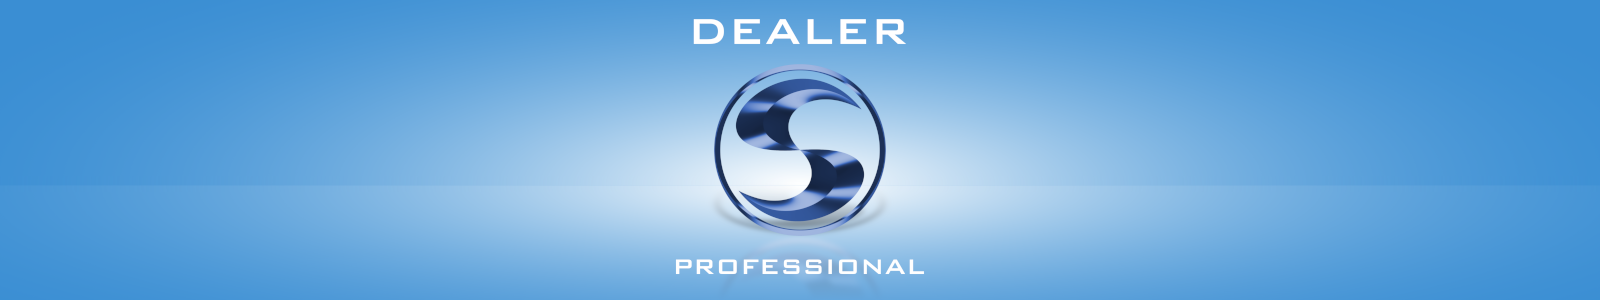 Dealer Professional - program for sellers of windows, doors and roller shutters